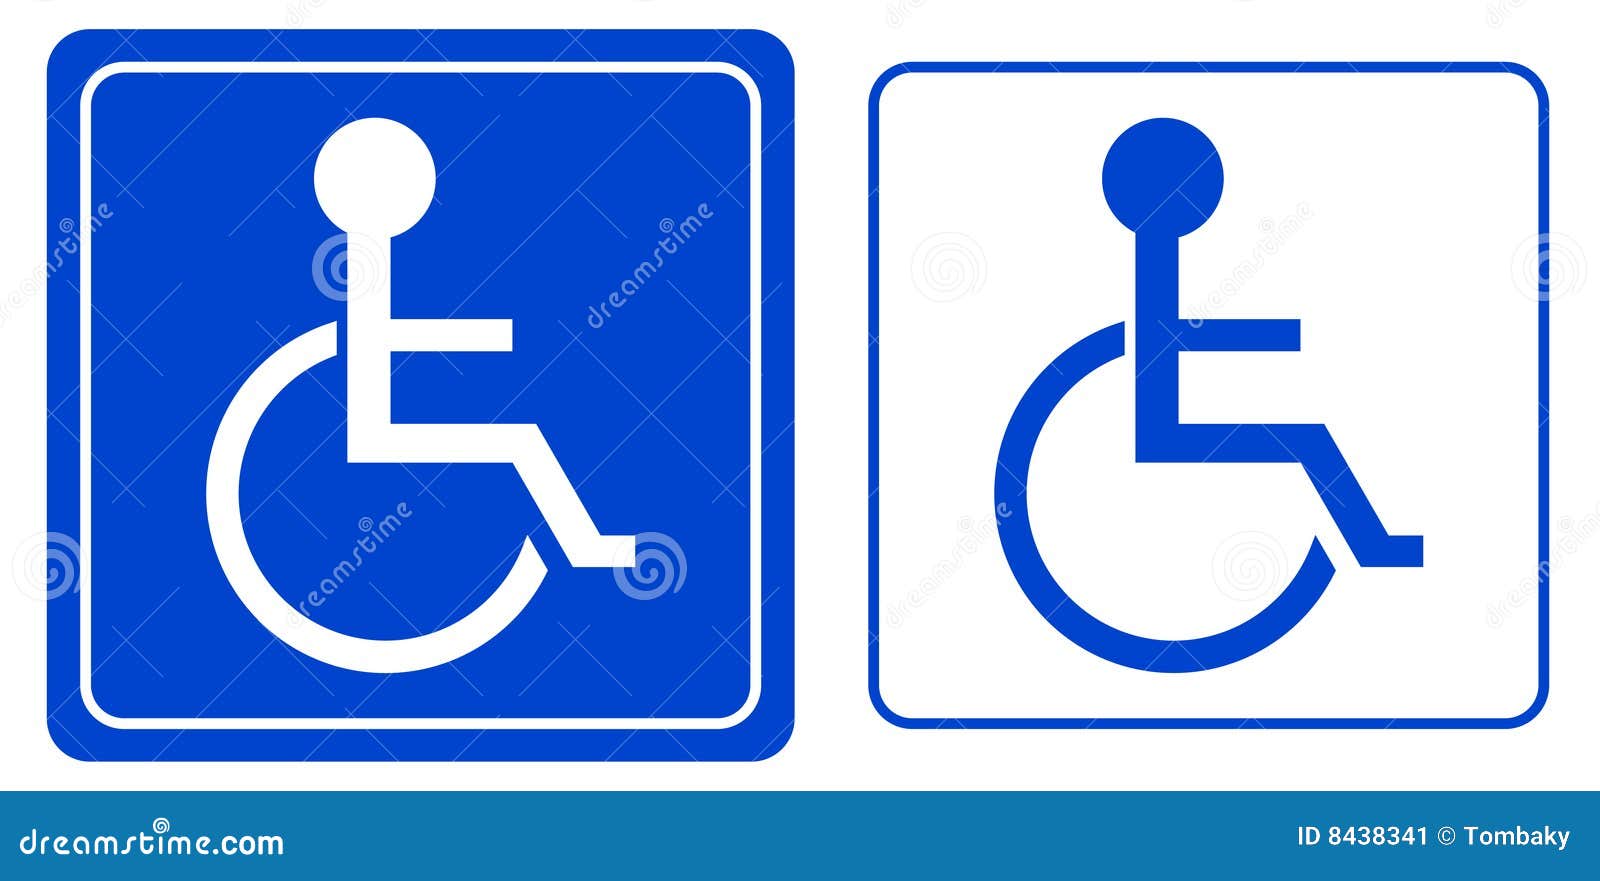 handicap or wheelchair person 